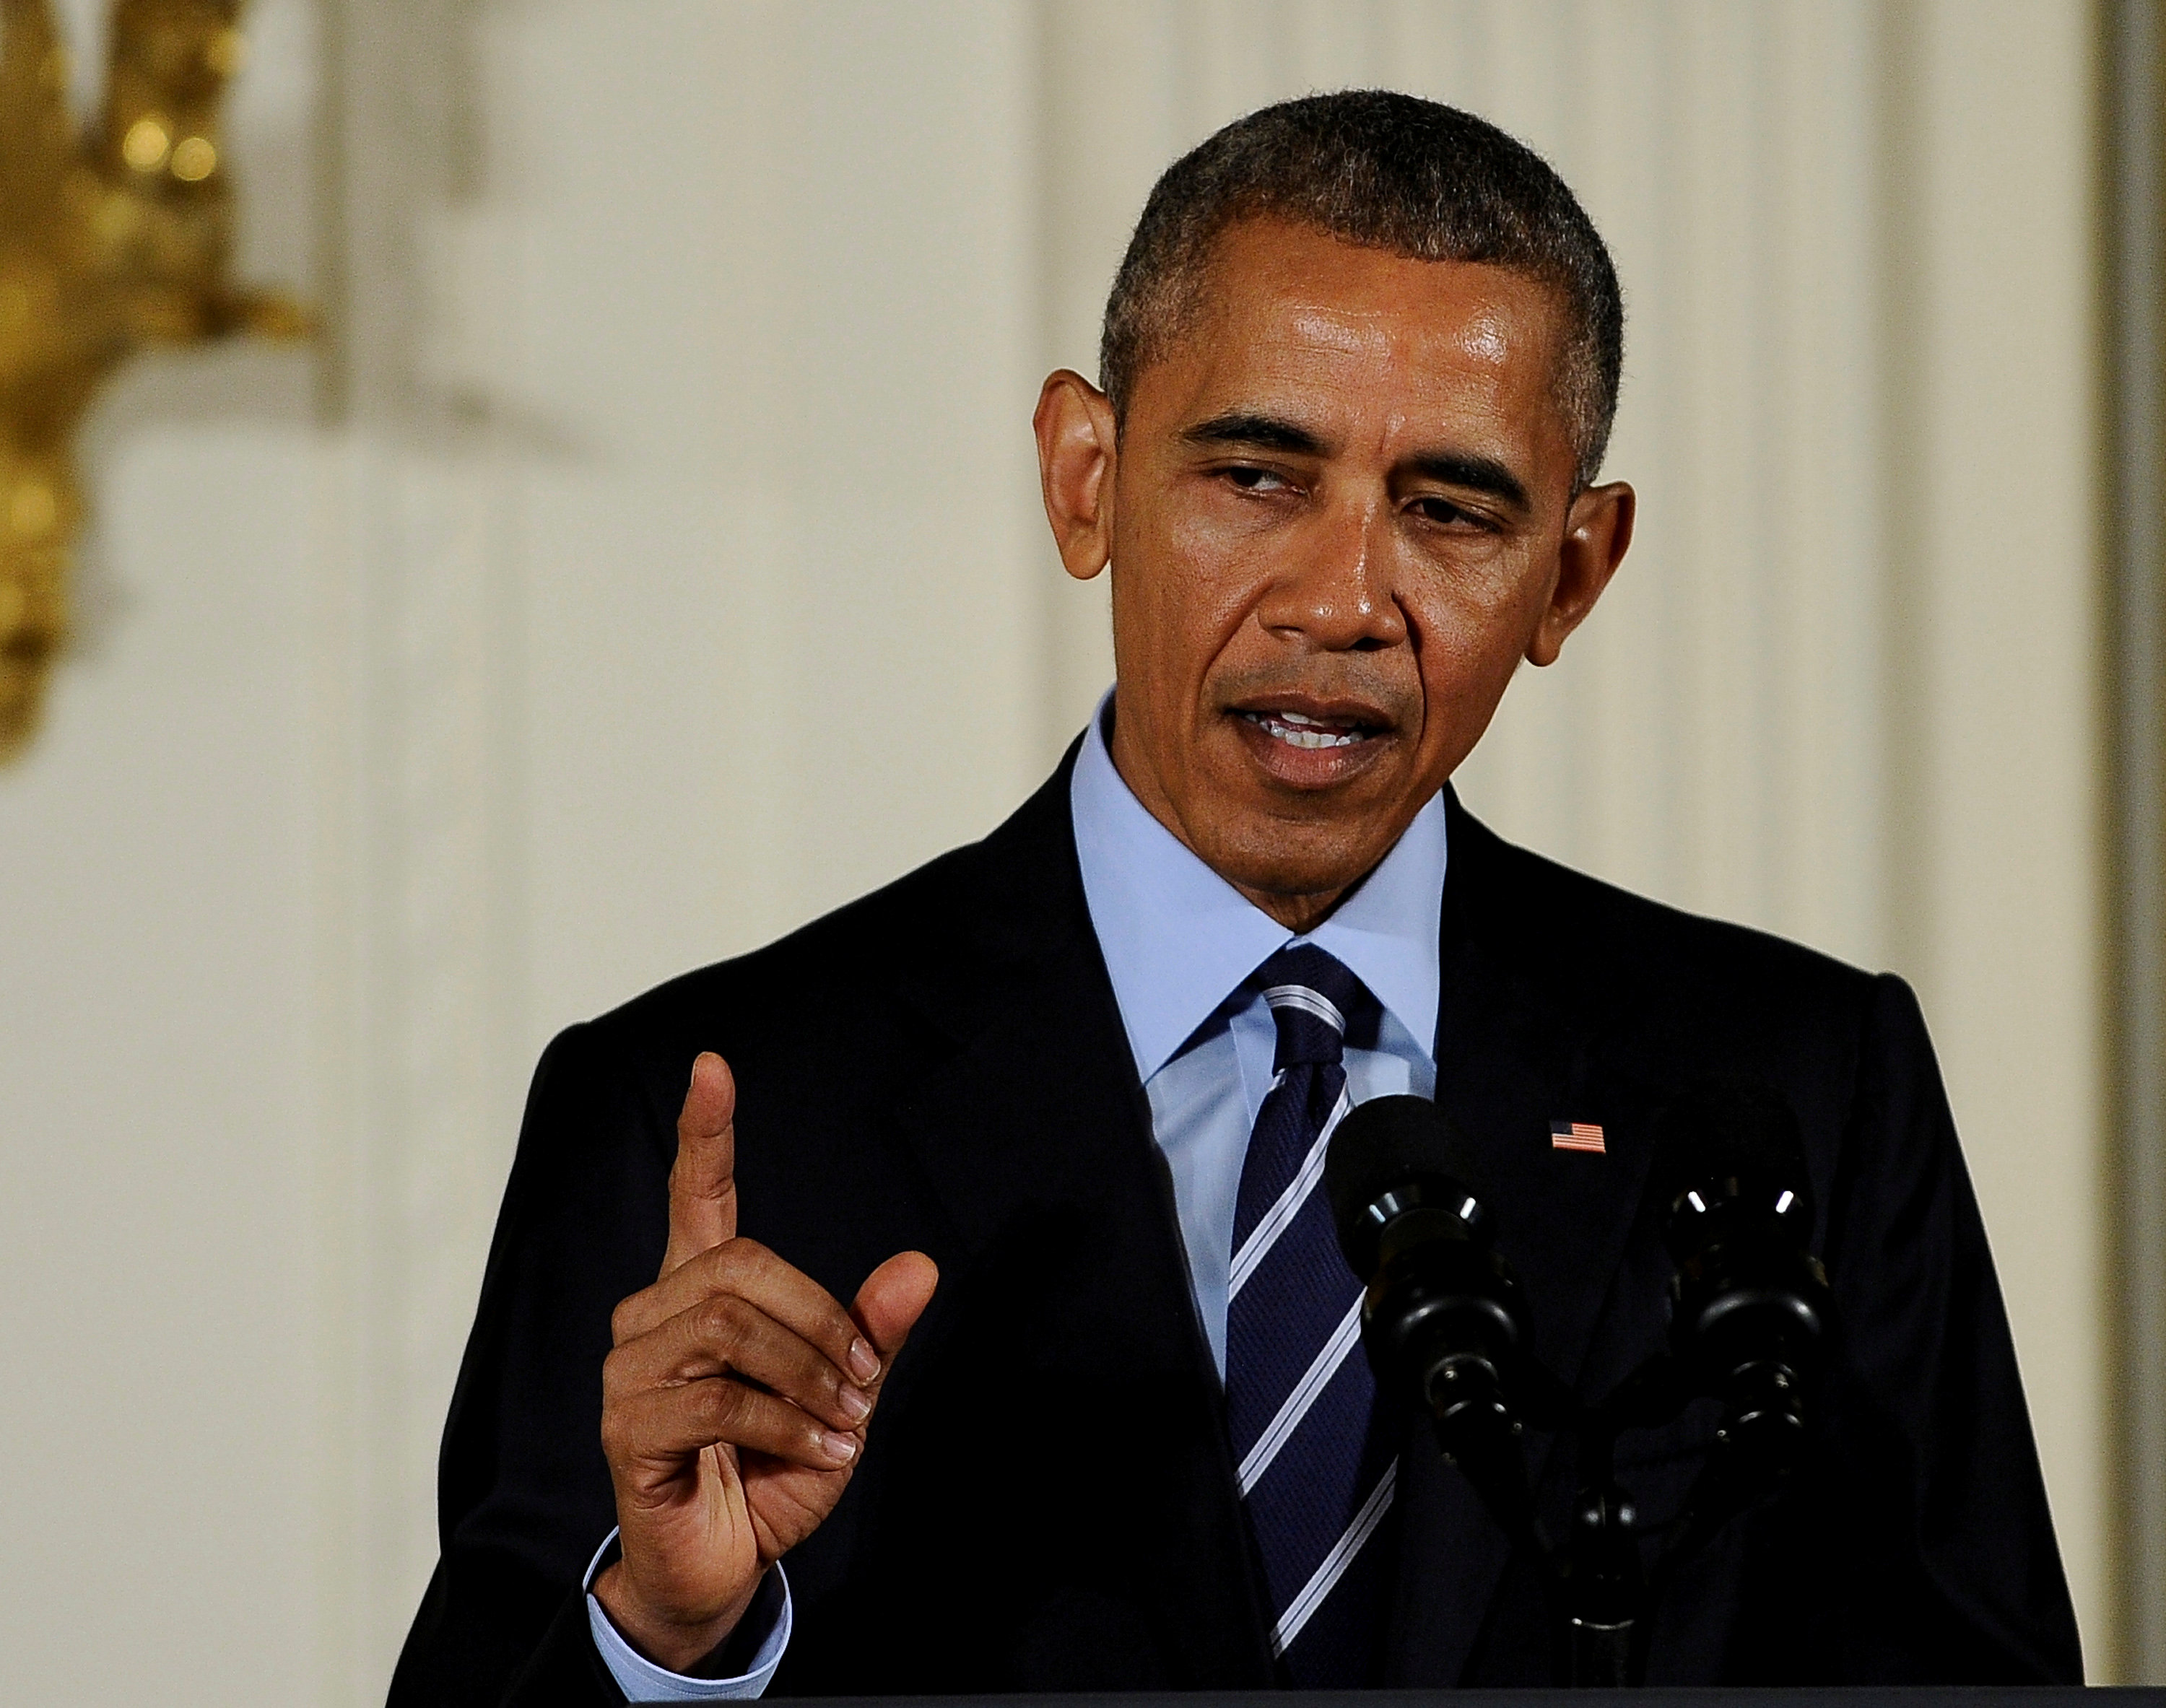 Barack Obama reafirmó que su esposa Michelle “nunca será candidata” presidencial